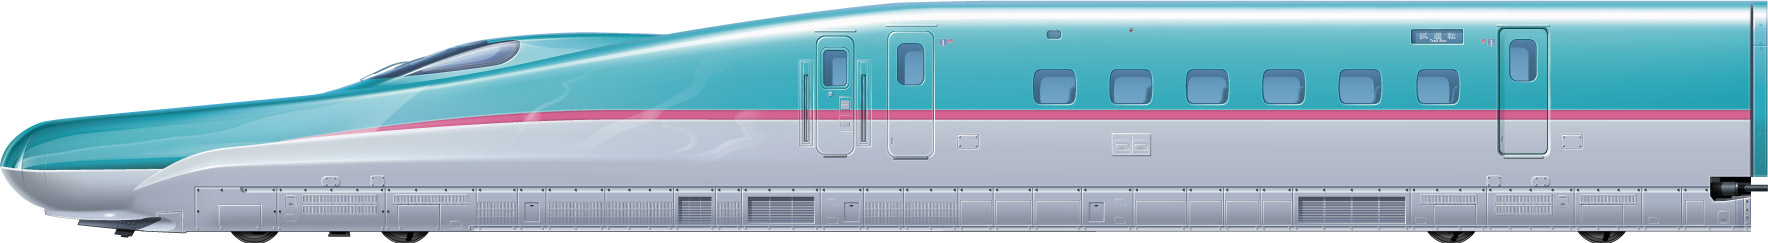 Jr 新幹線e5系 サイドビューイラスト